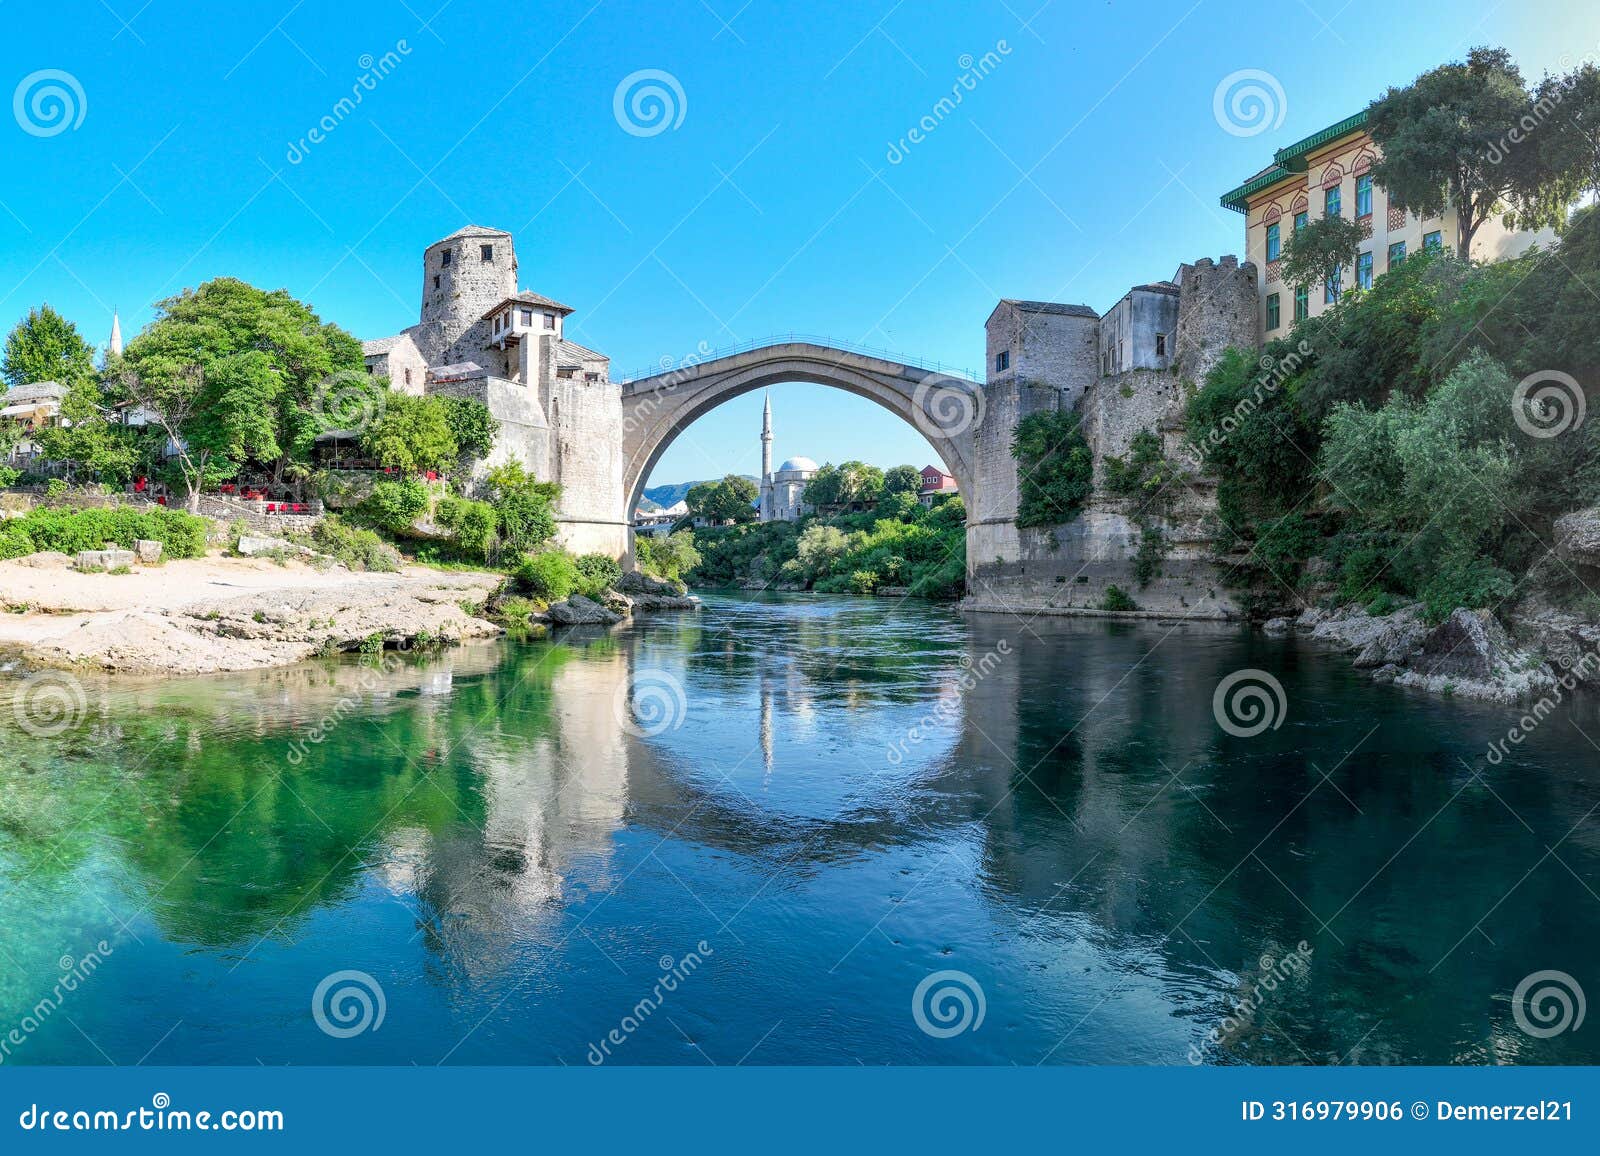 old bridge - mostar, bosnia herzegovina